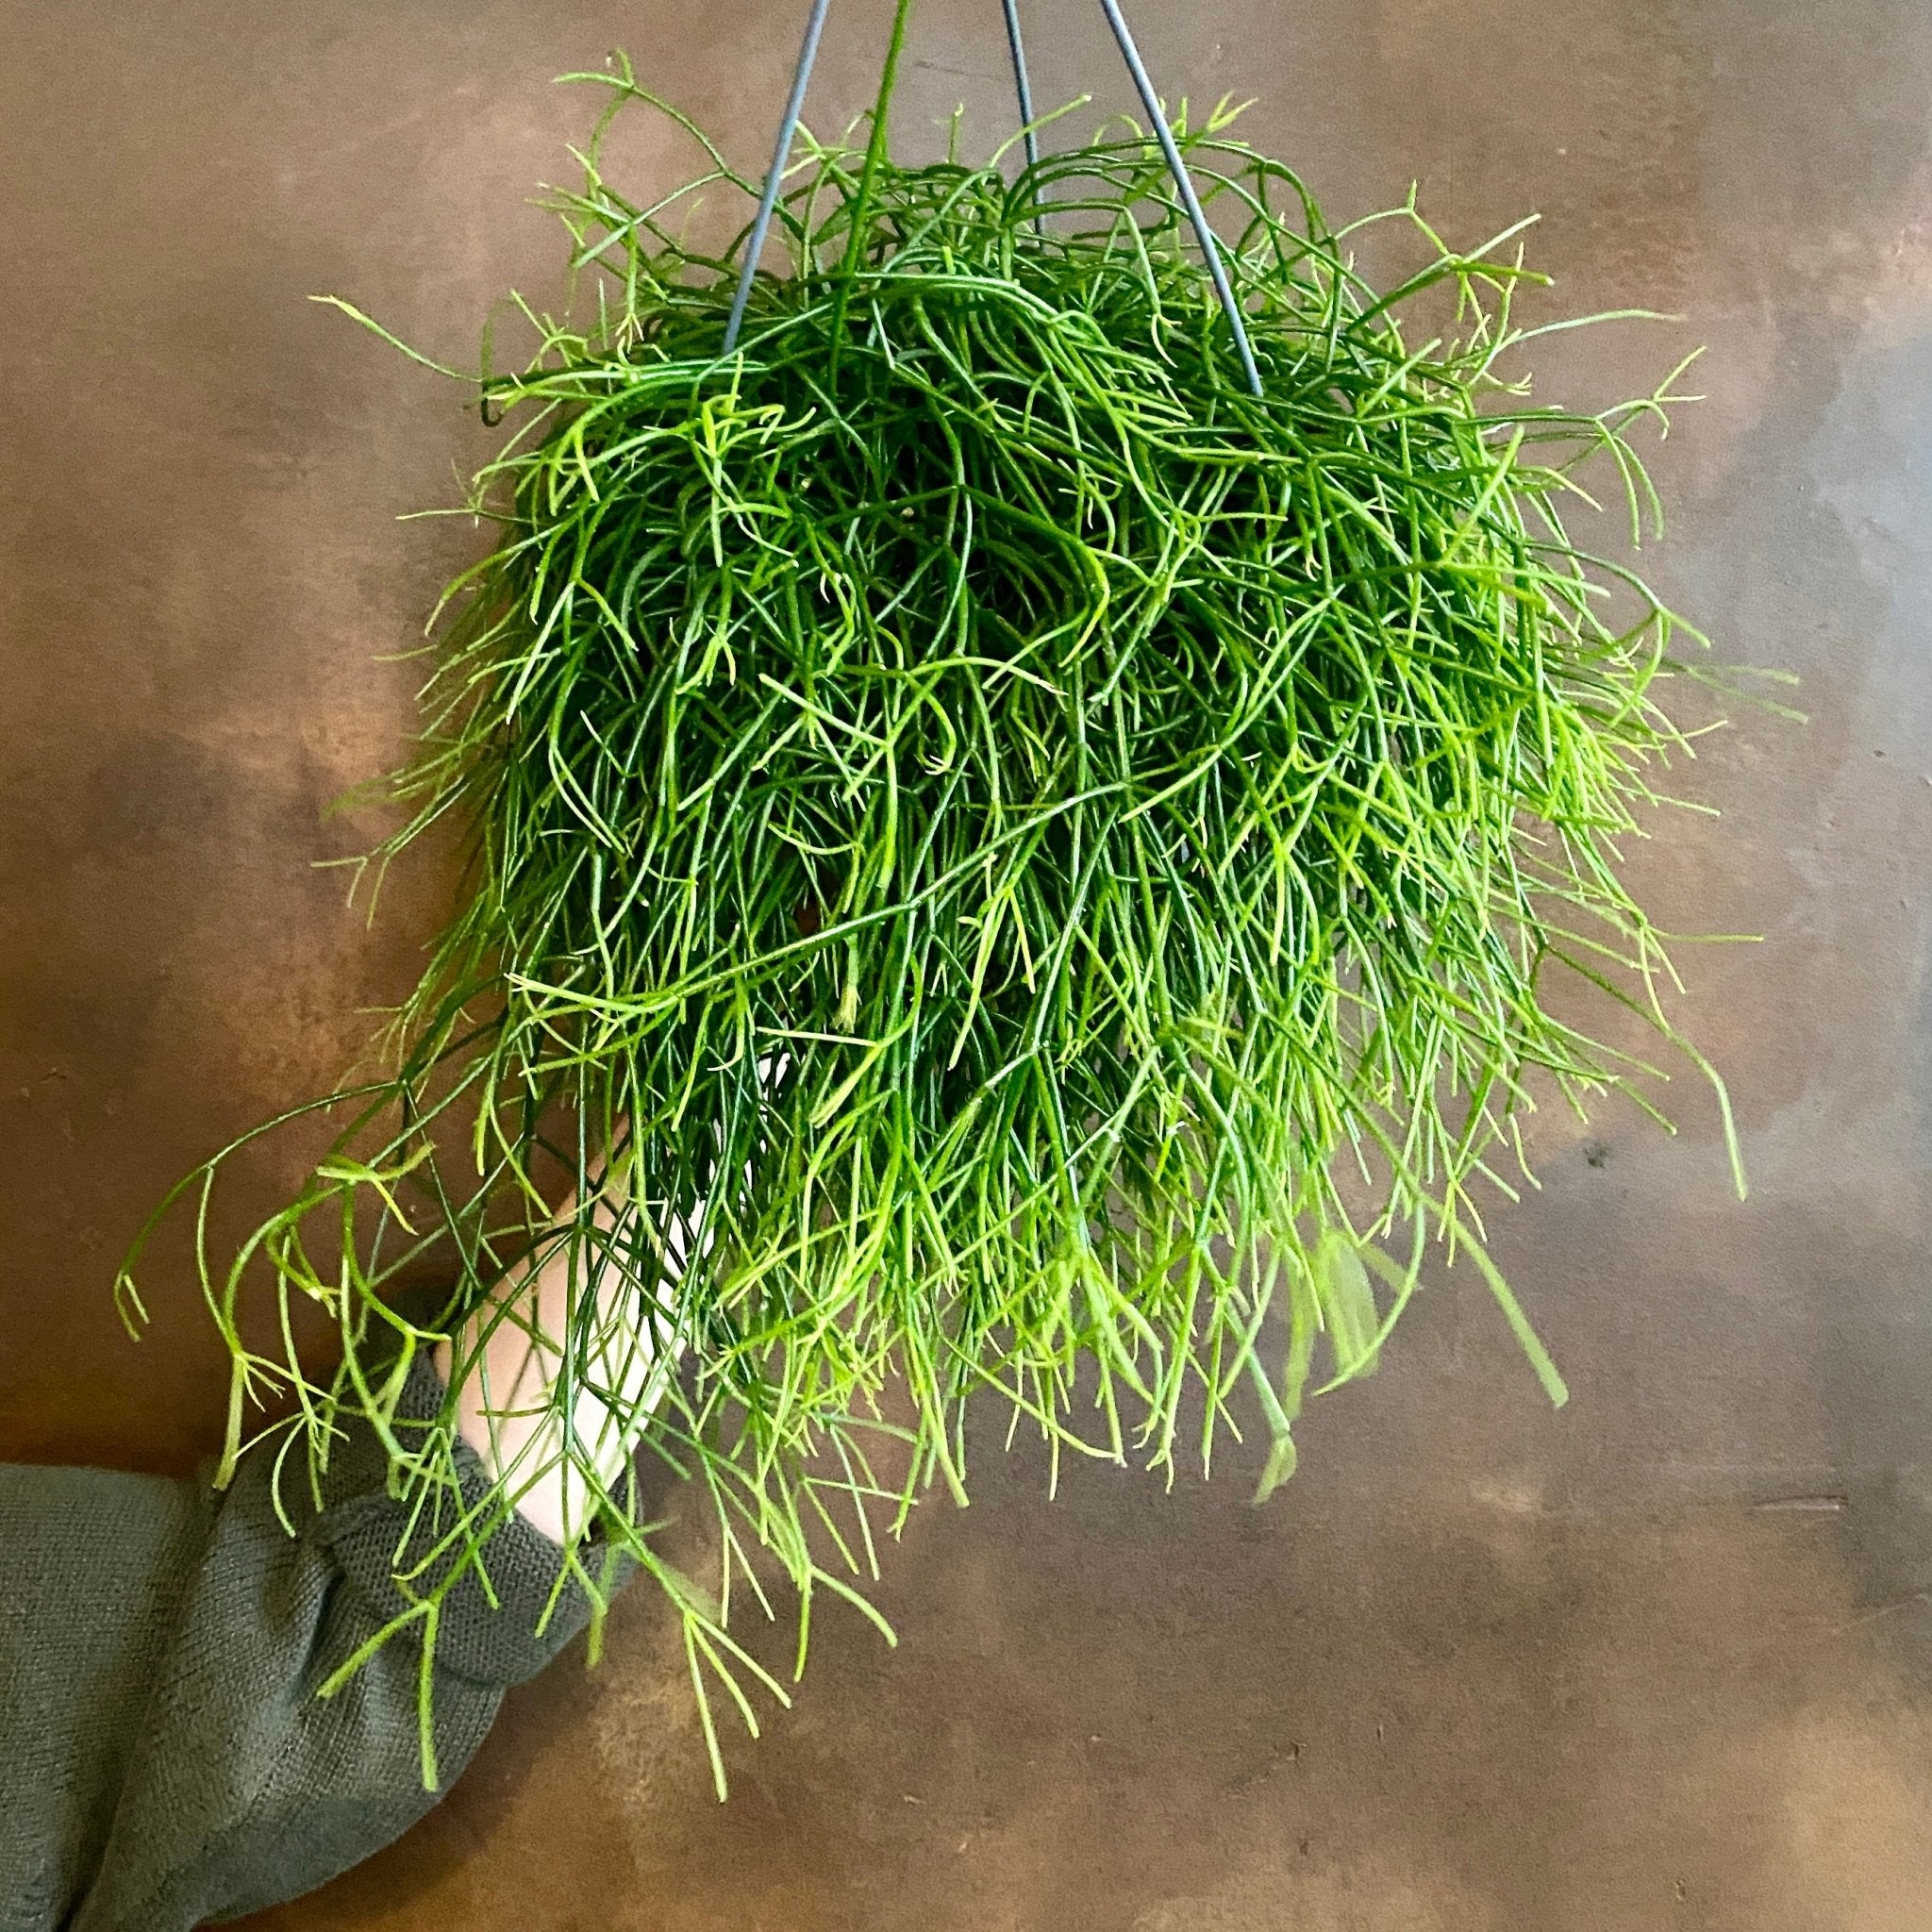 Rhipsalis cassutha 'Cassera' (17cm hangpot) - grow urban. UK